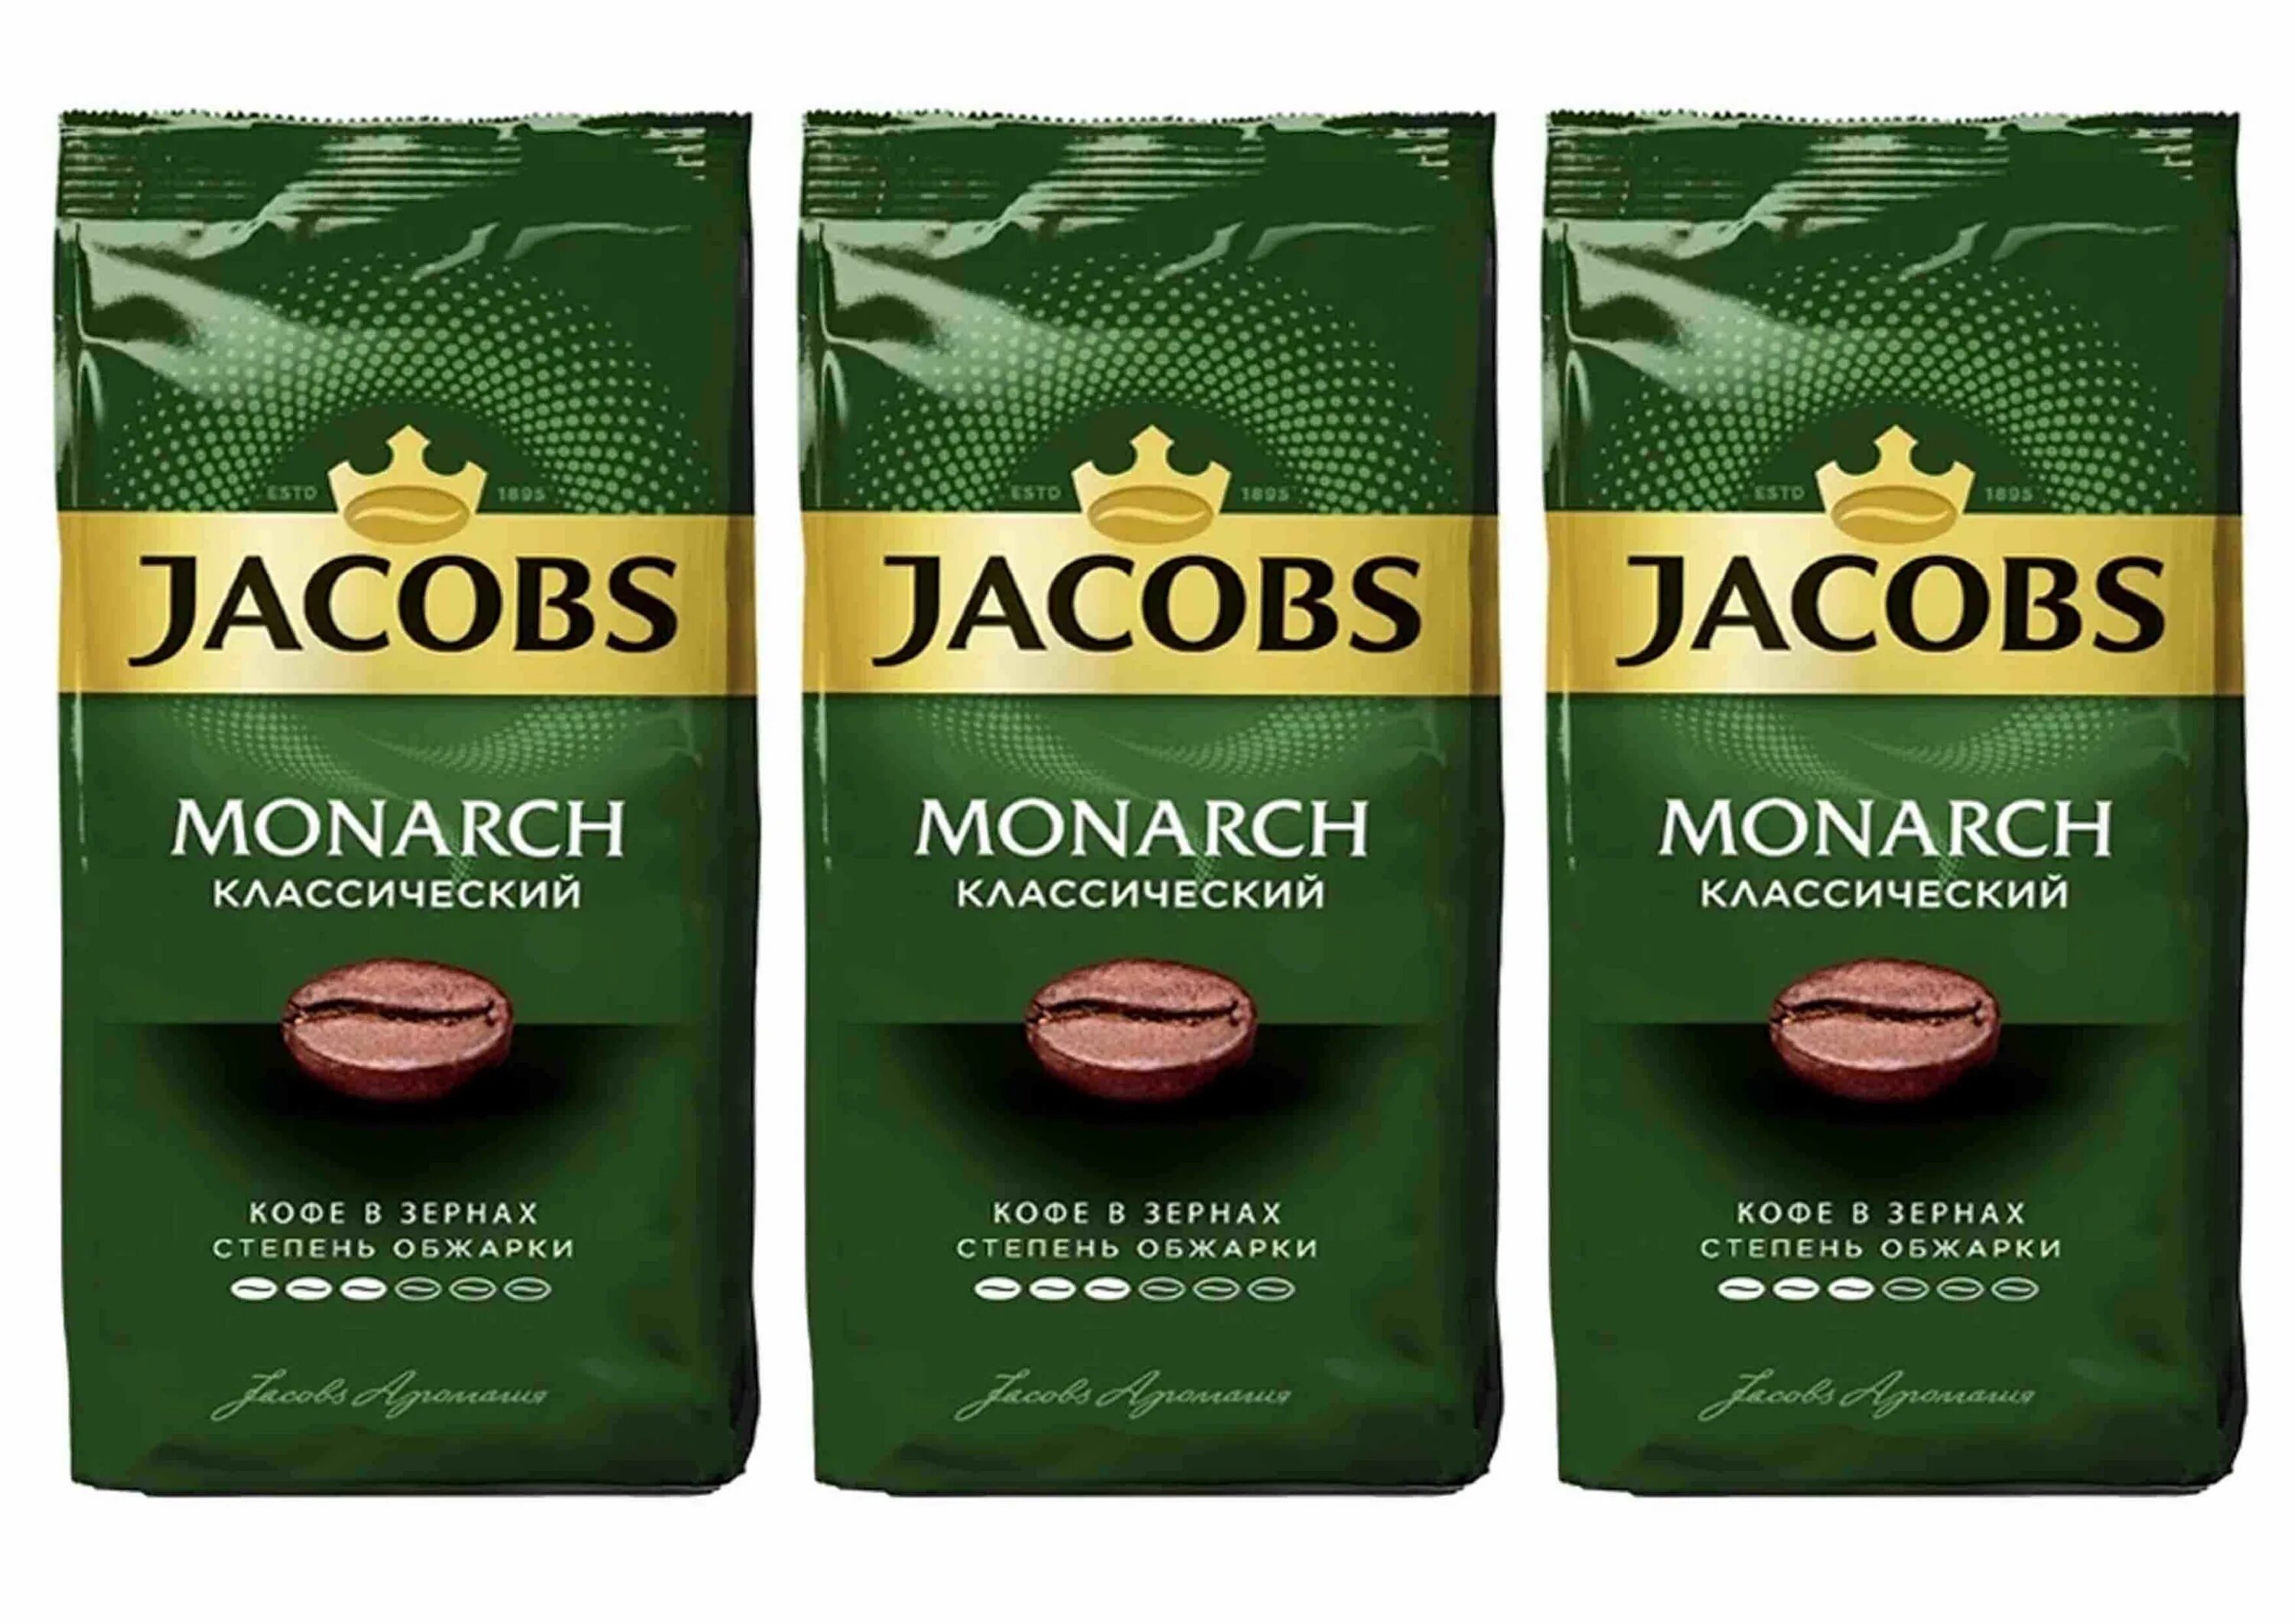 Кофе Jacobs Монарх 500 гр. Якобс Монарх 230 грамм. Кофе Jacobs Monarch 230 гр Monarch. Jacobs Monarch 230гр ПВХ.